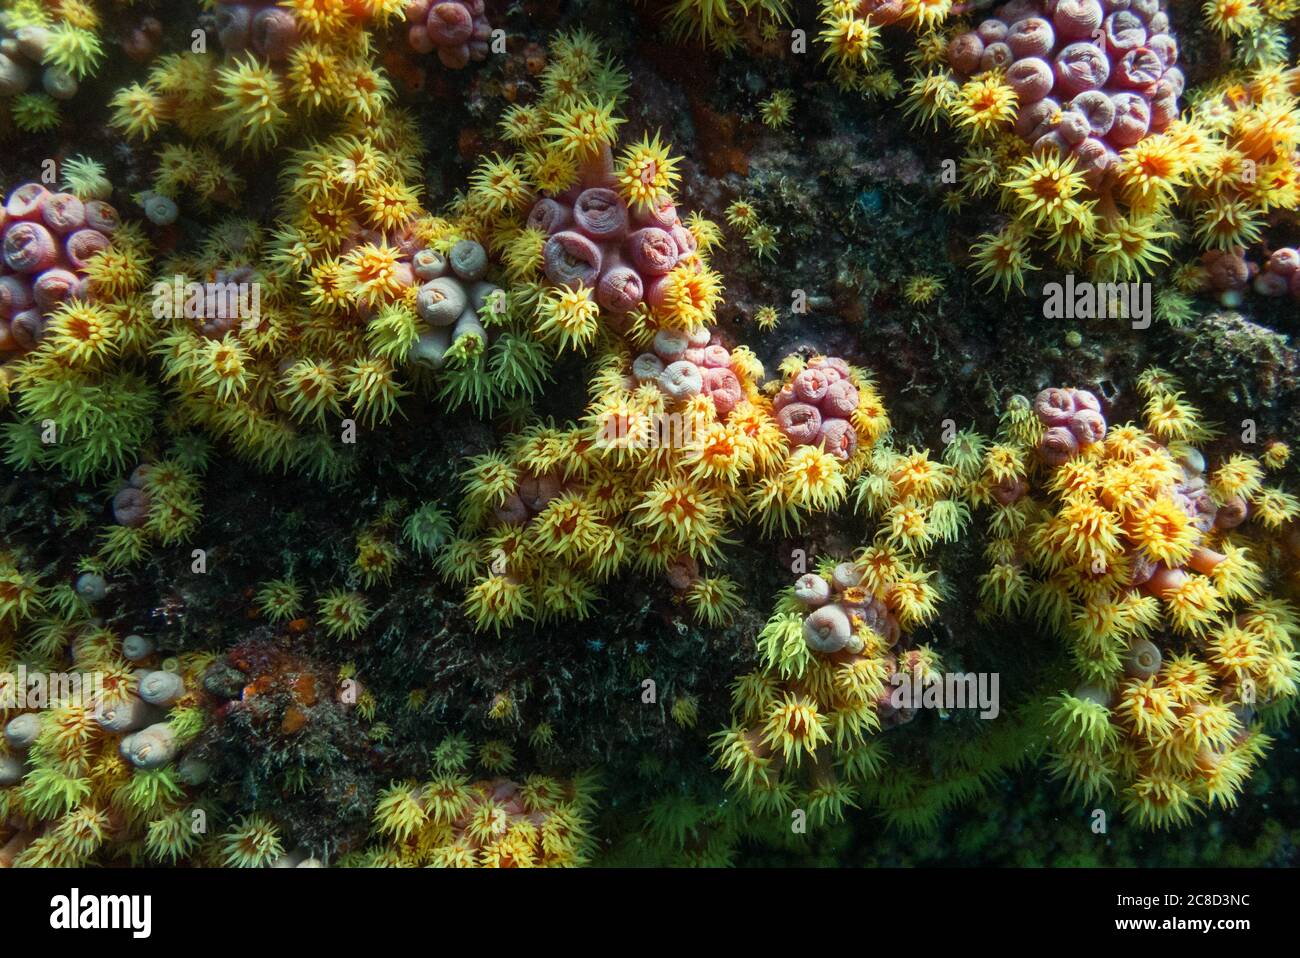 Sun Coral (Tubastaea tagusensis), an invasive species photographed at Ilhabela, SE Brazil Stock Photo